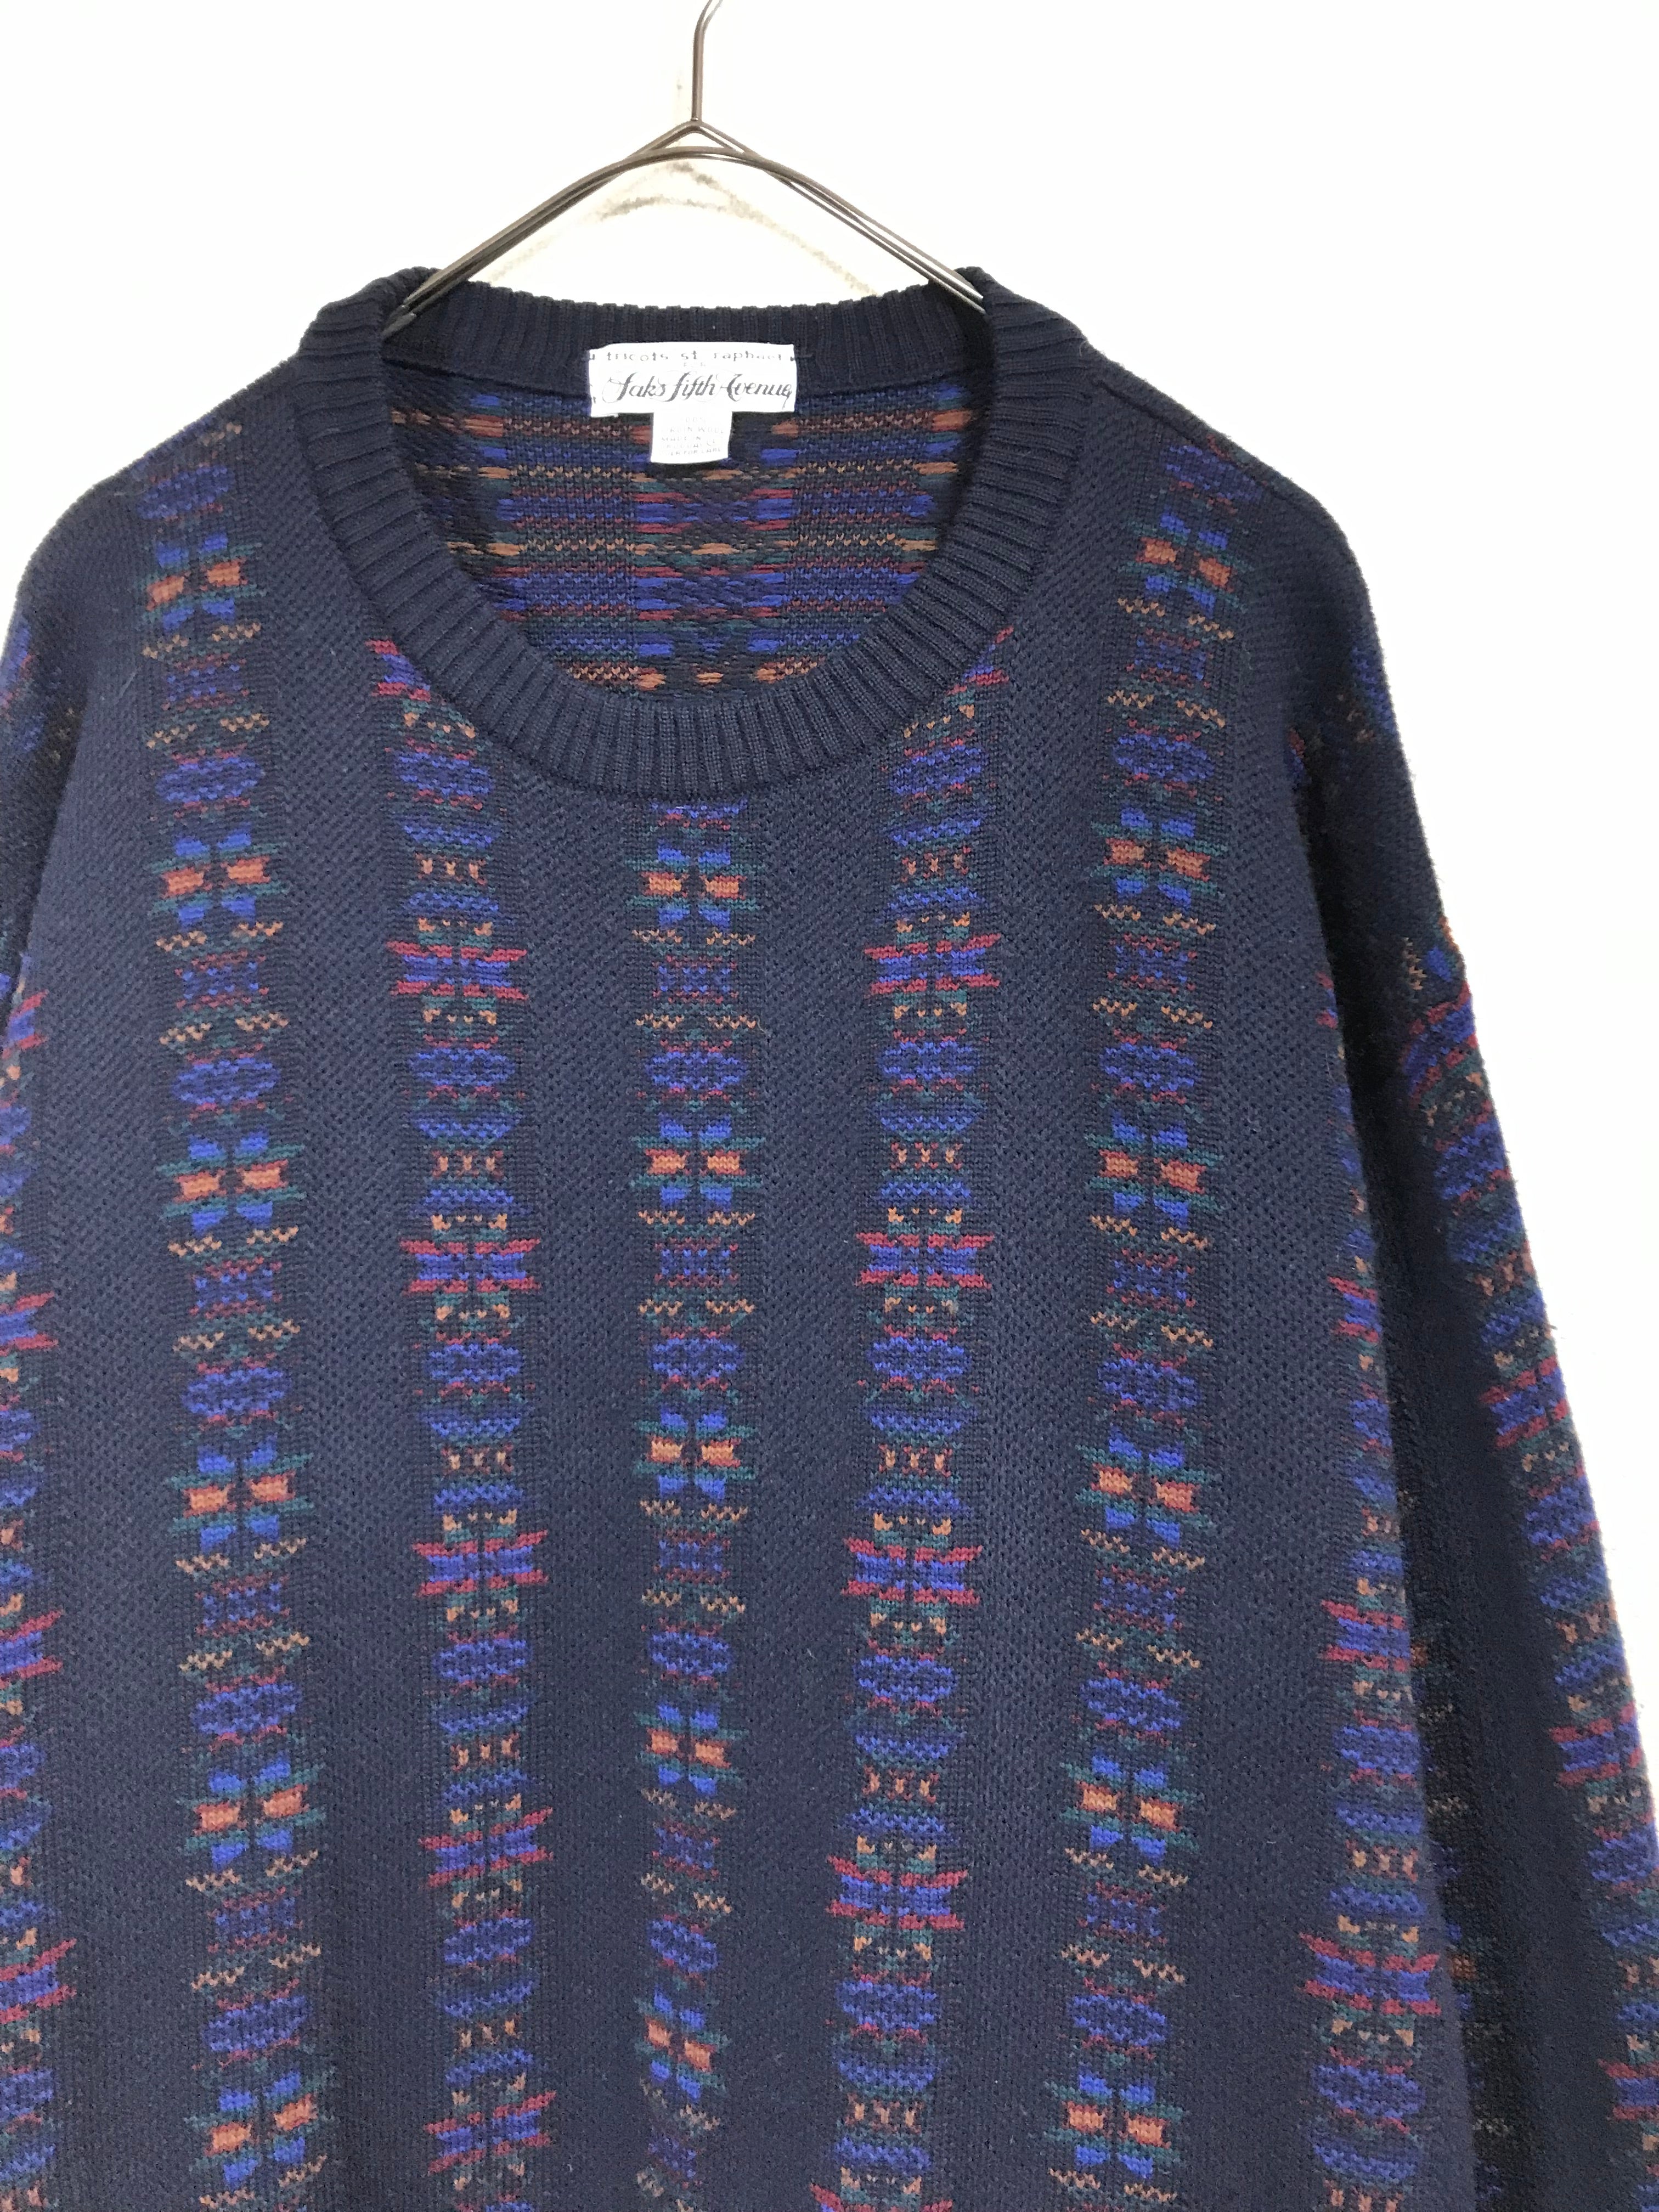 80's wool patterned knit sweater